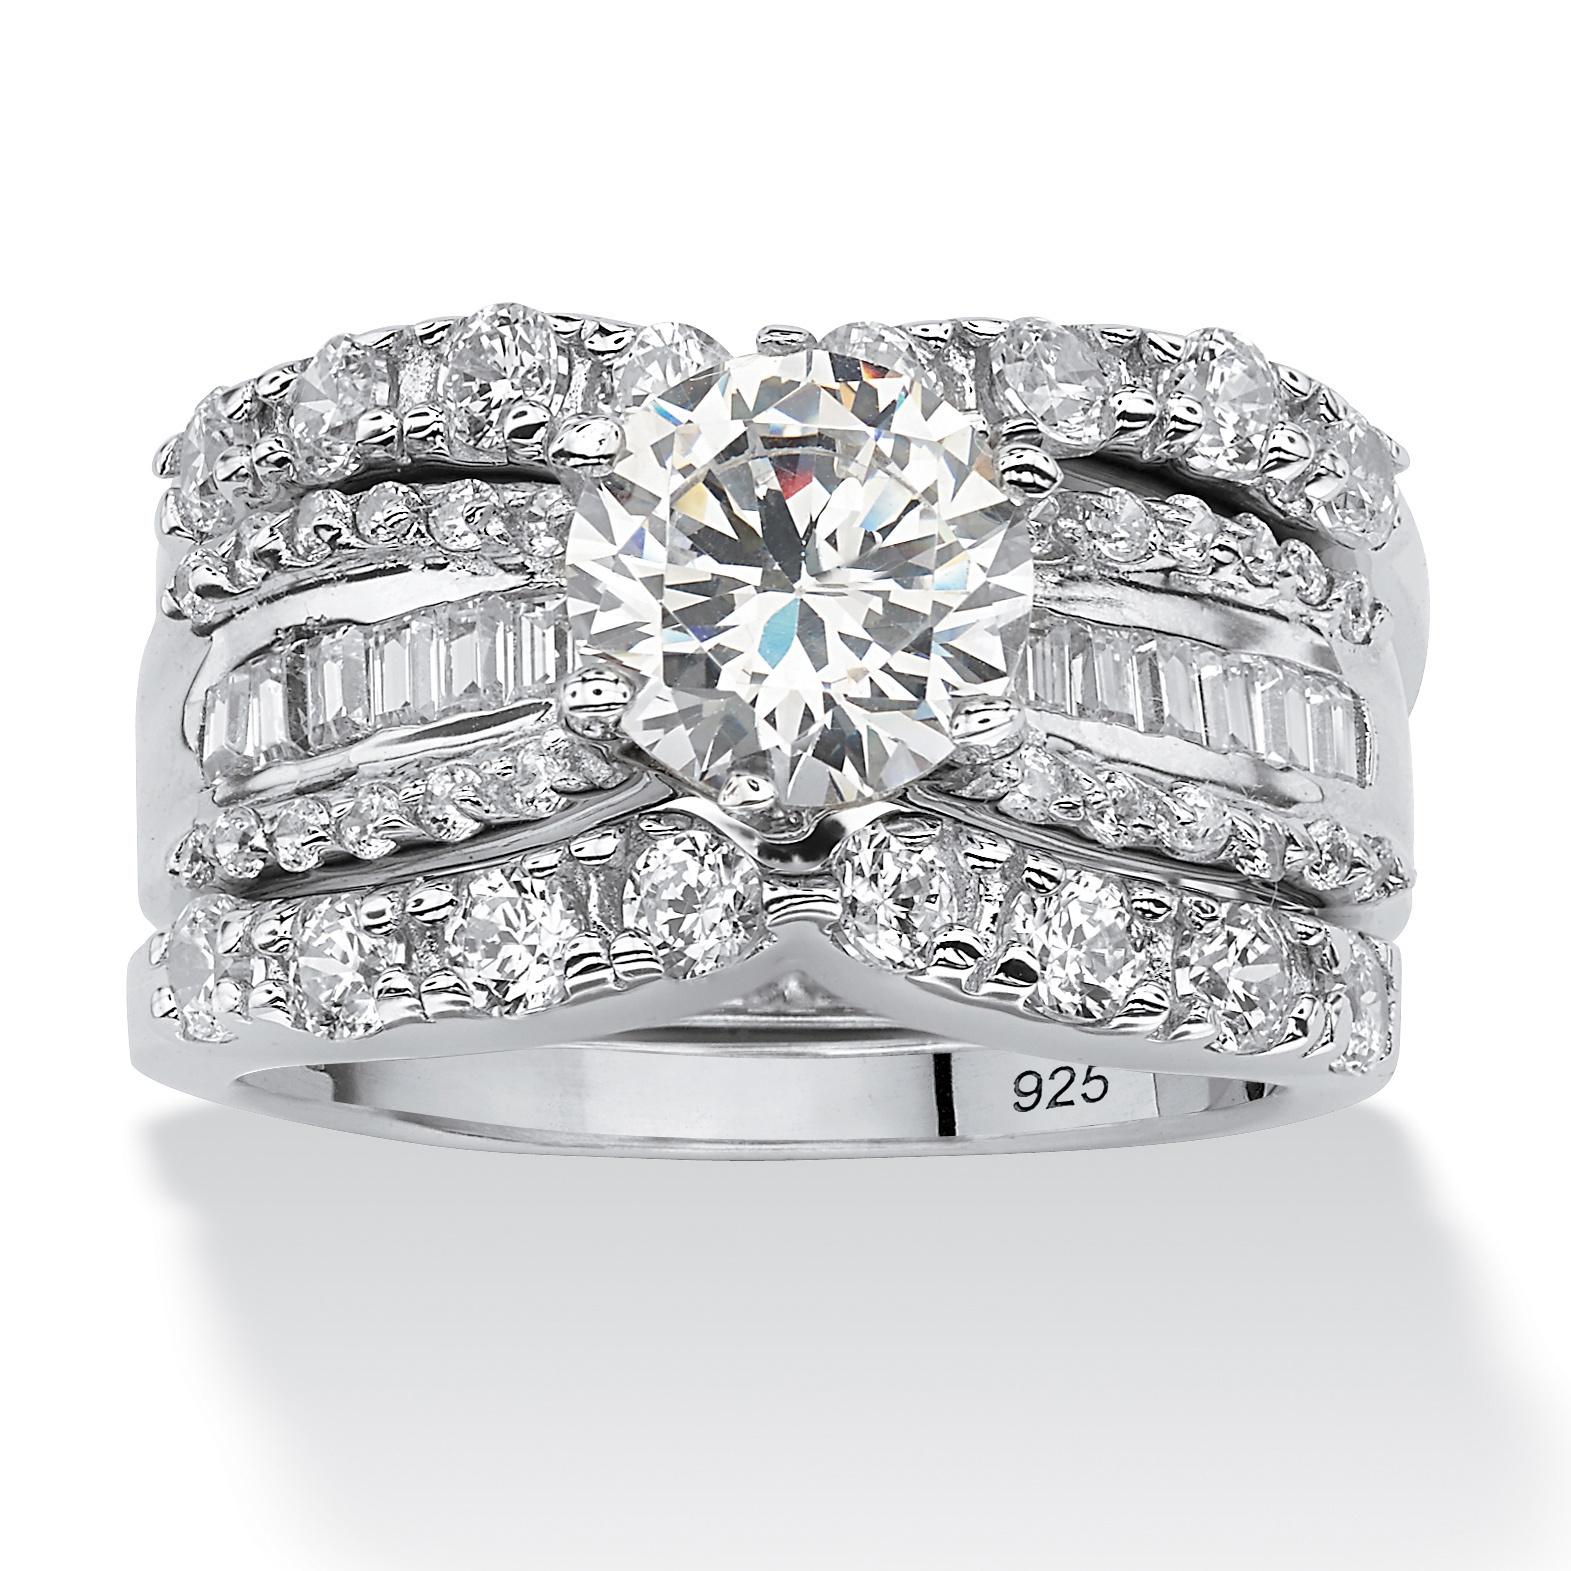 Wedding Rings Wedding Ring Sets Cubic Zirconia Wedding Rings